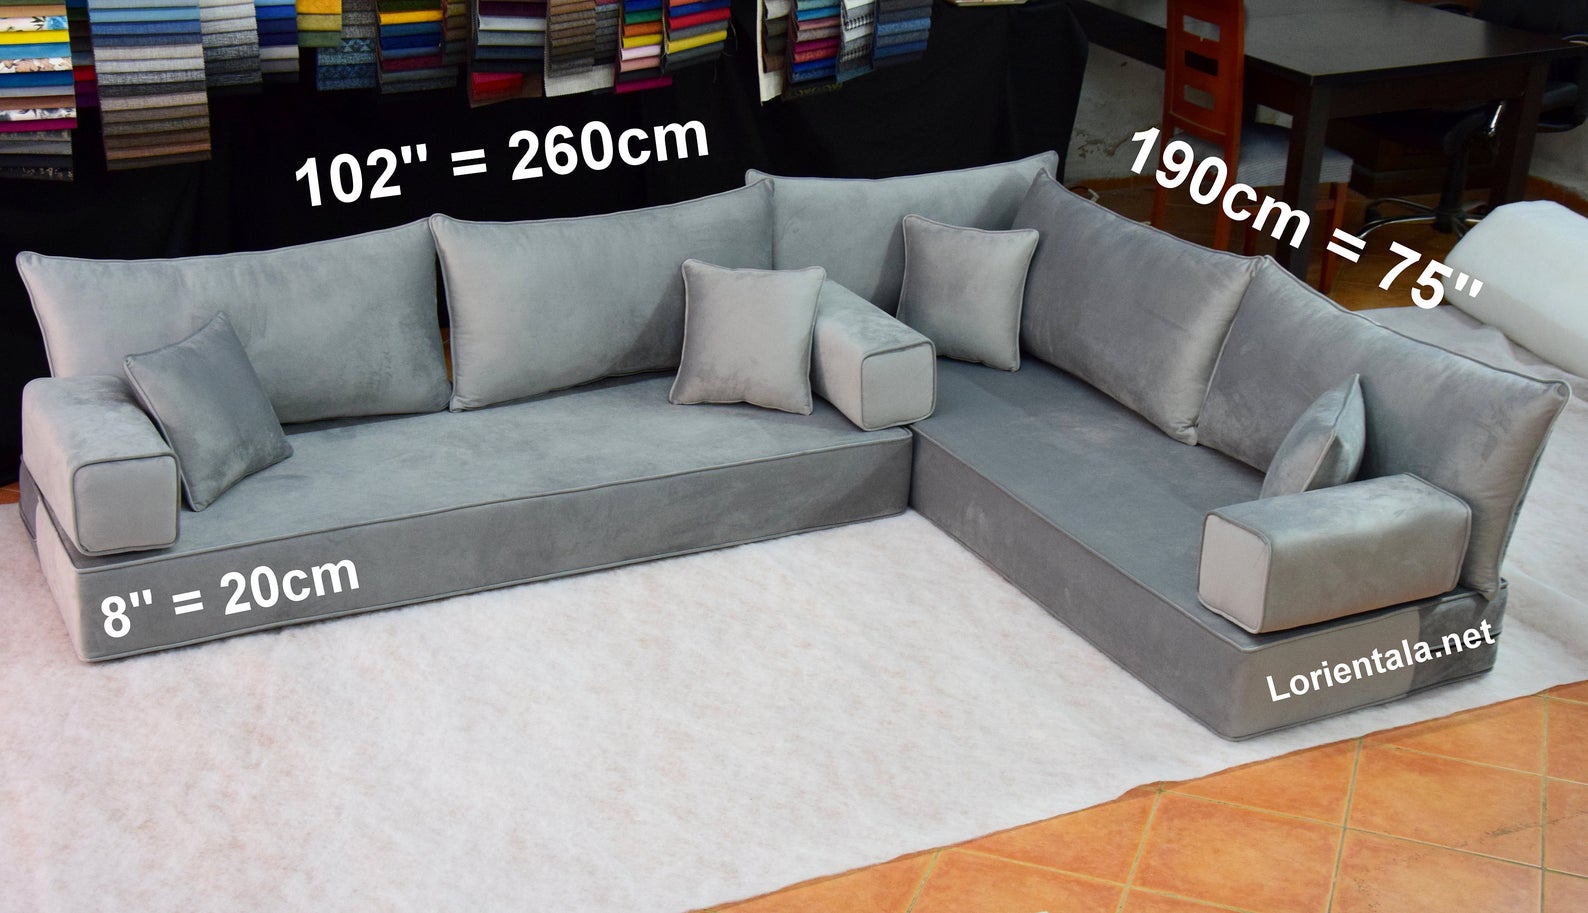 VELVET Gray Floor Seating Sofa Living Room Turkish Decor Oriental Floor Set  Cushions Japanese Seat Bohemian Furniture Couch Fabric Indoor 